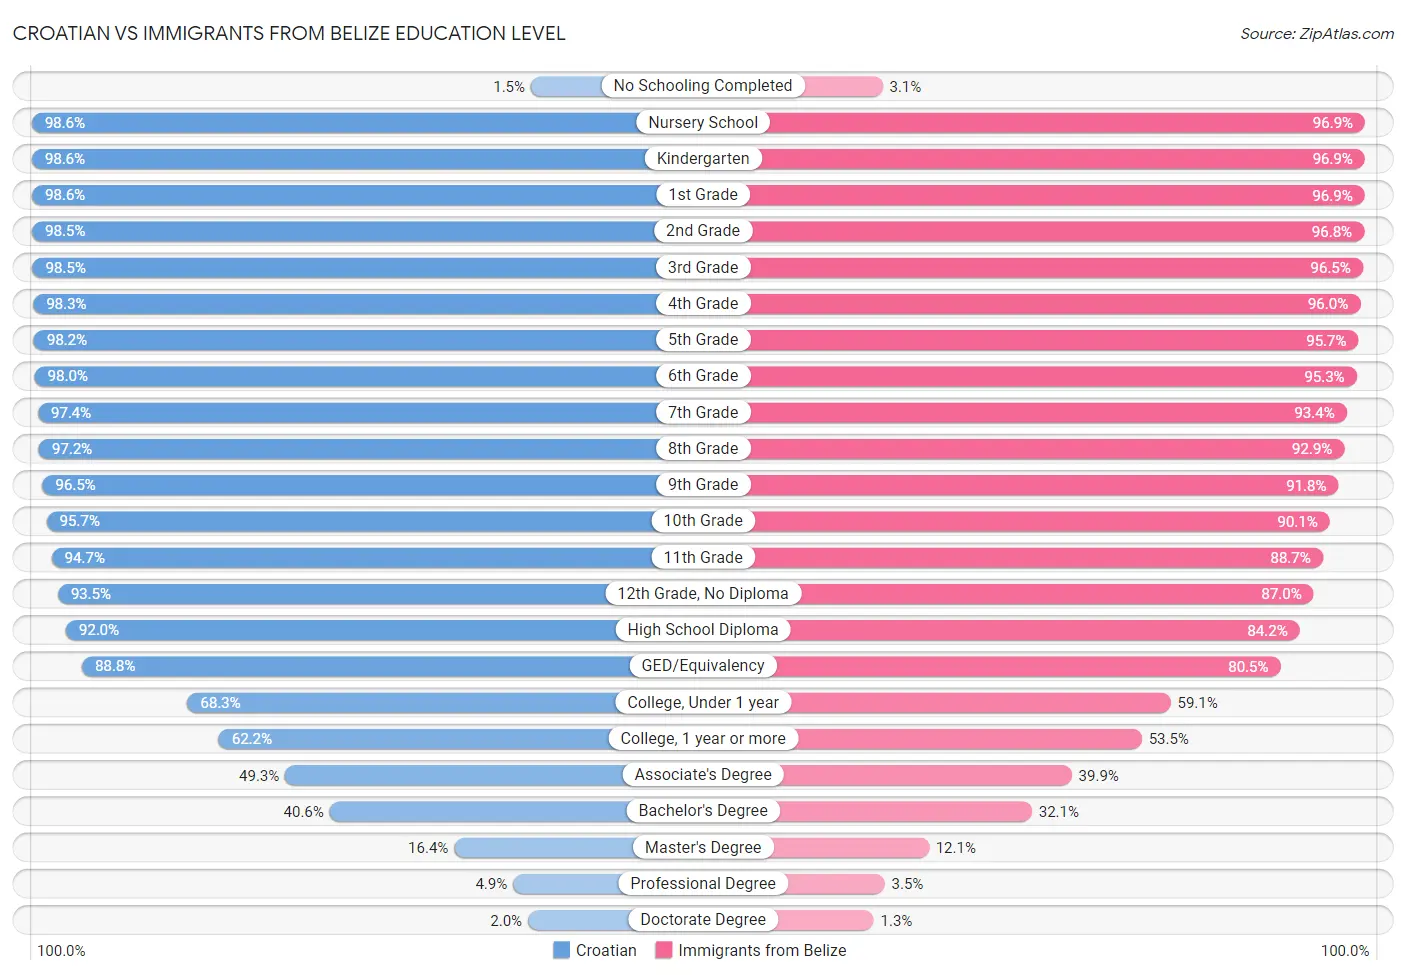 Croatian vs Immigrants from Belize Education Level